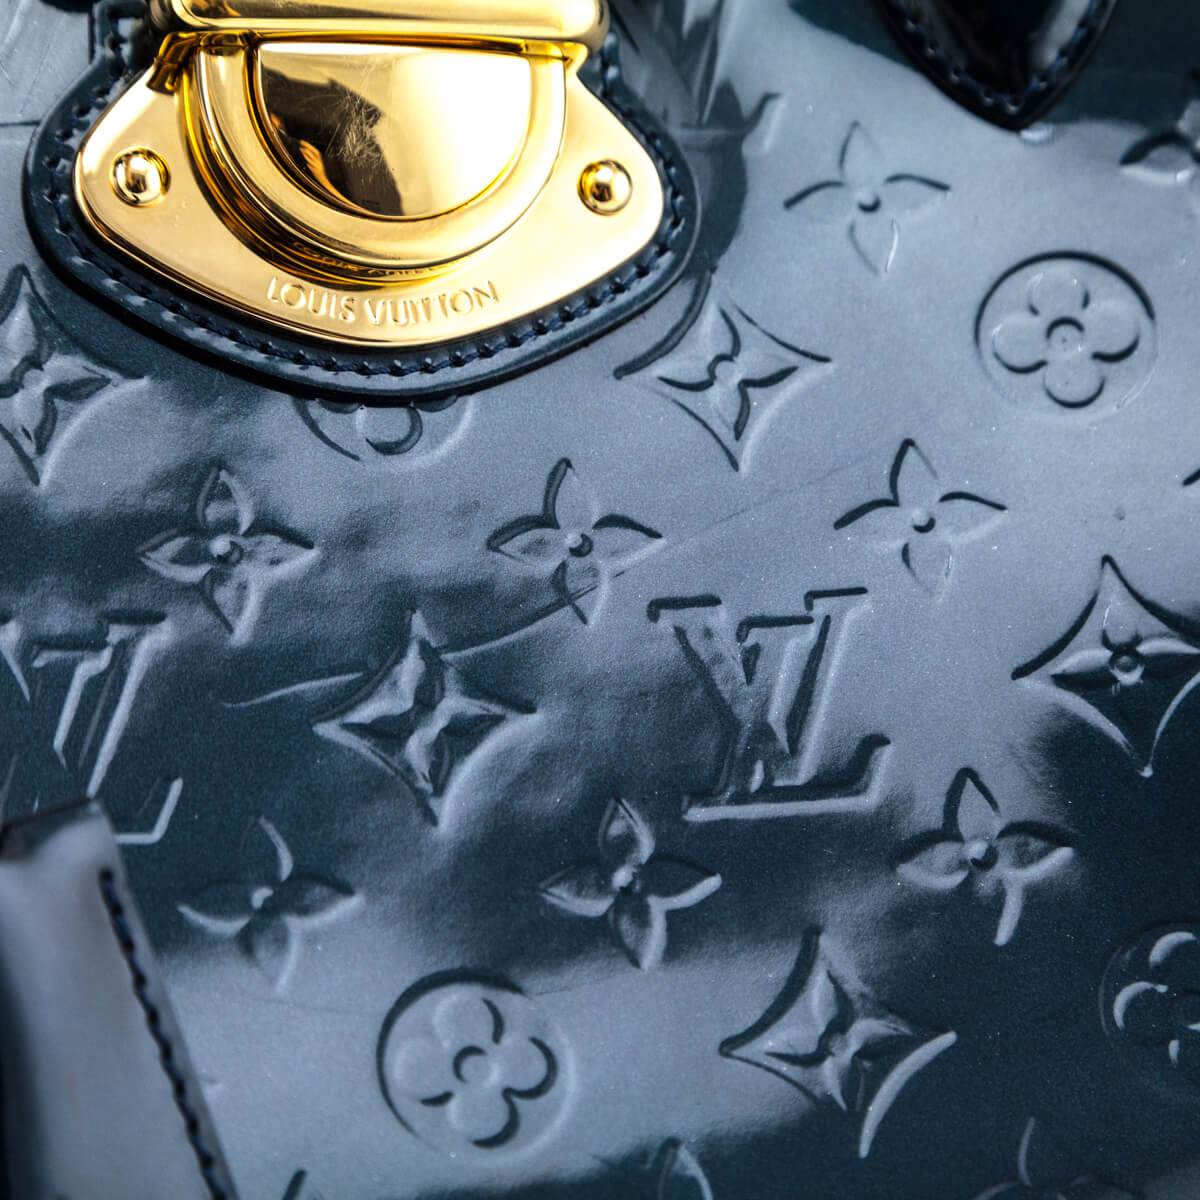 Louis Vuitton Monogram Vernis Melrose Avenue Bag - BOPF